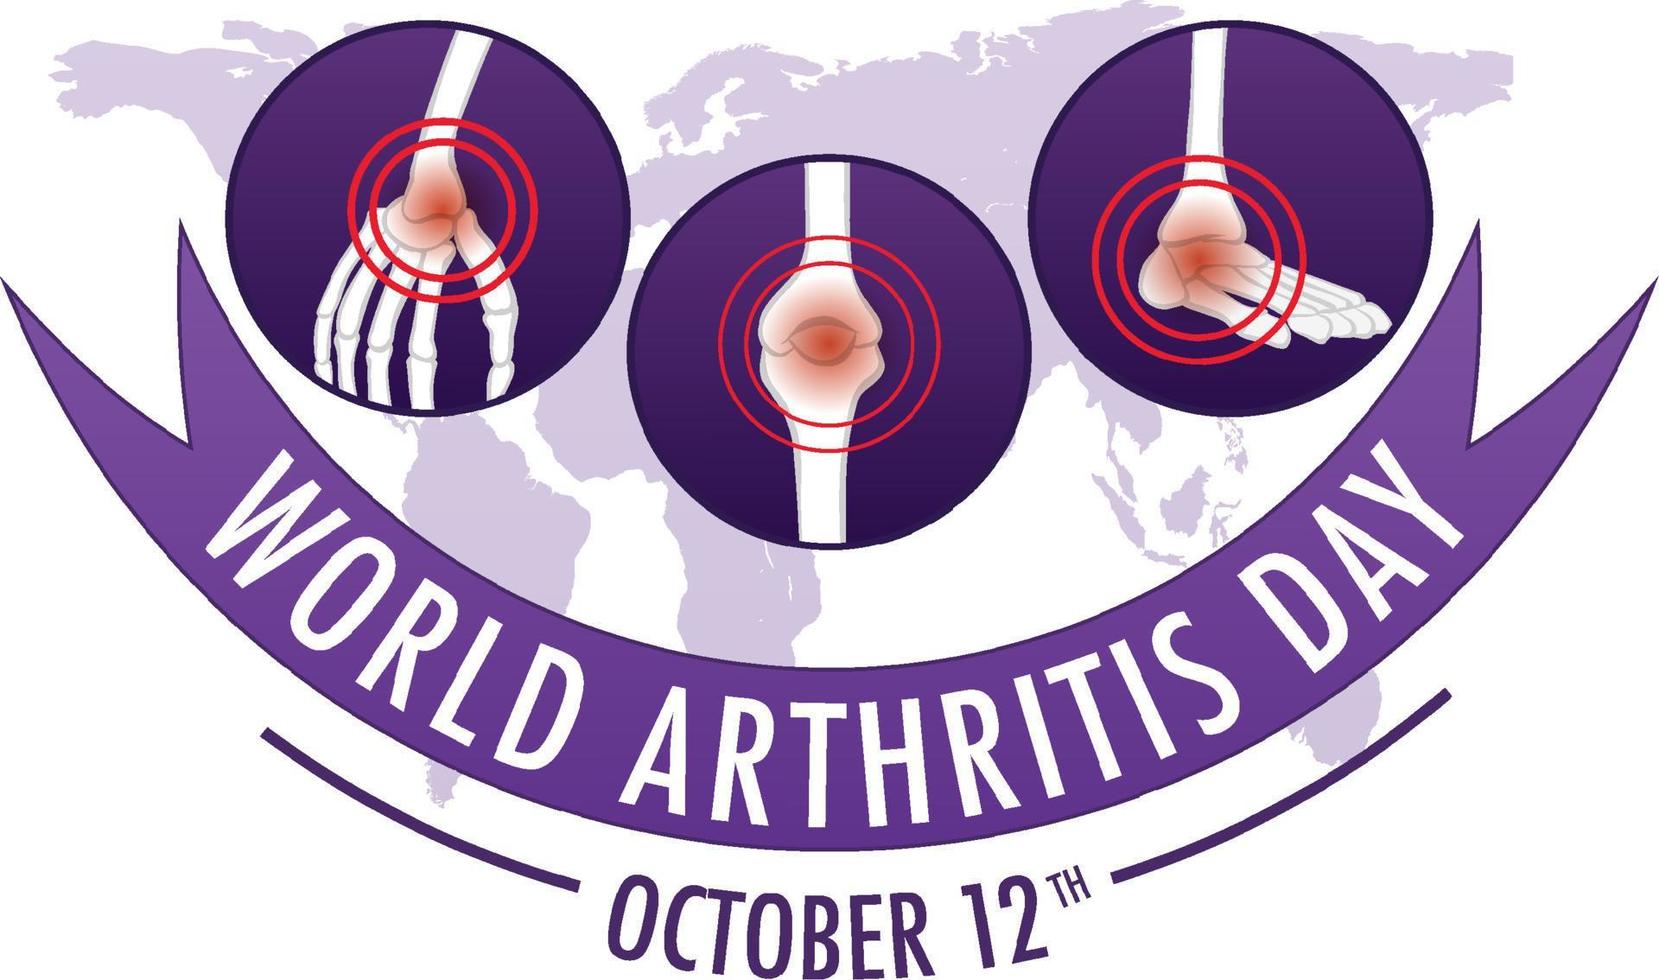 World Arthritis Day Poster Design vector